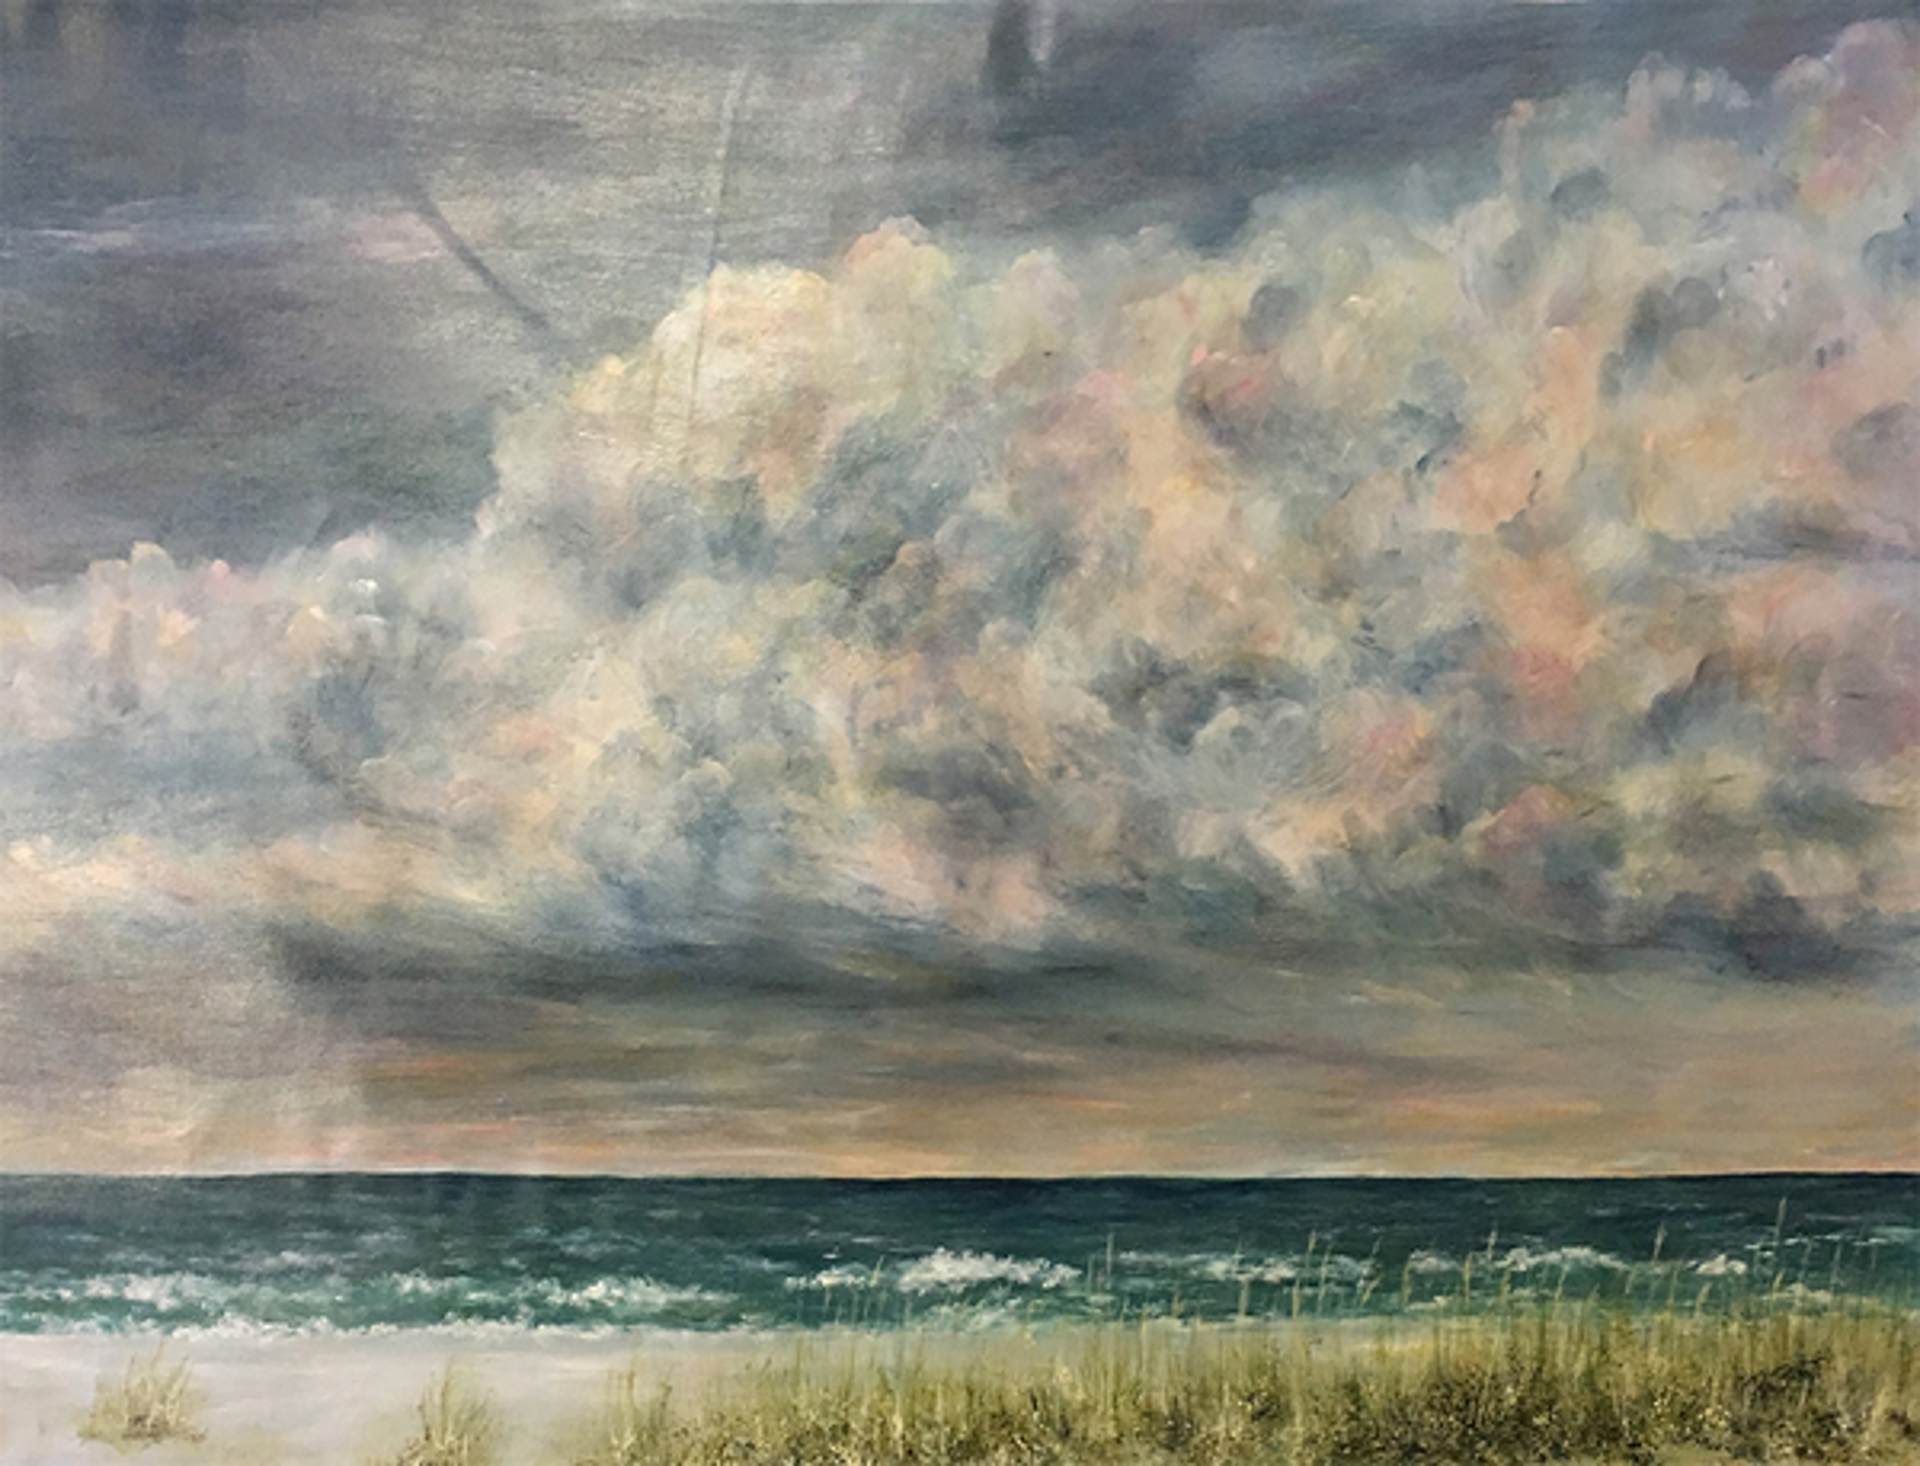 Ocean Scene 2 by Pam Brant